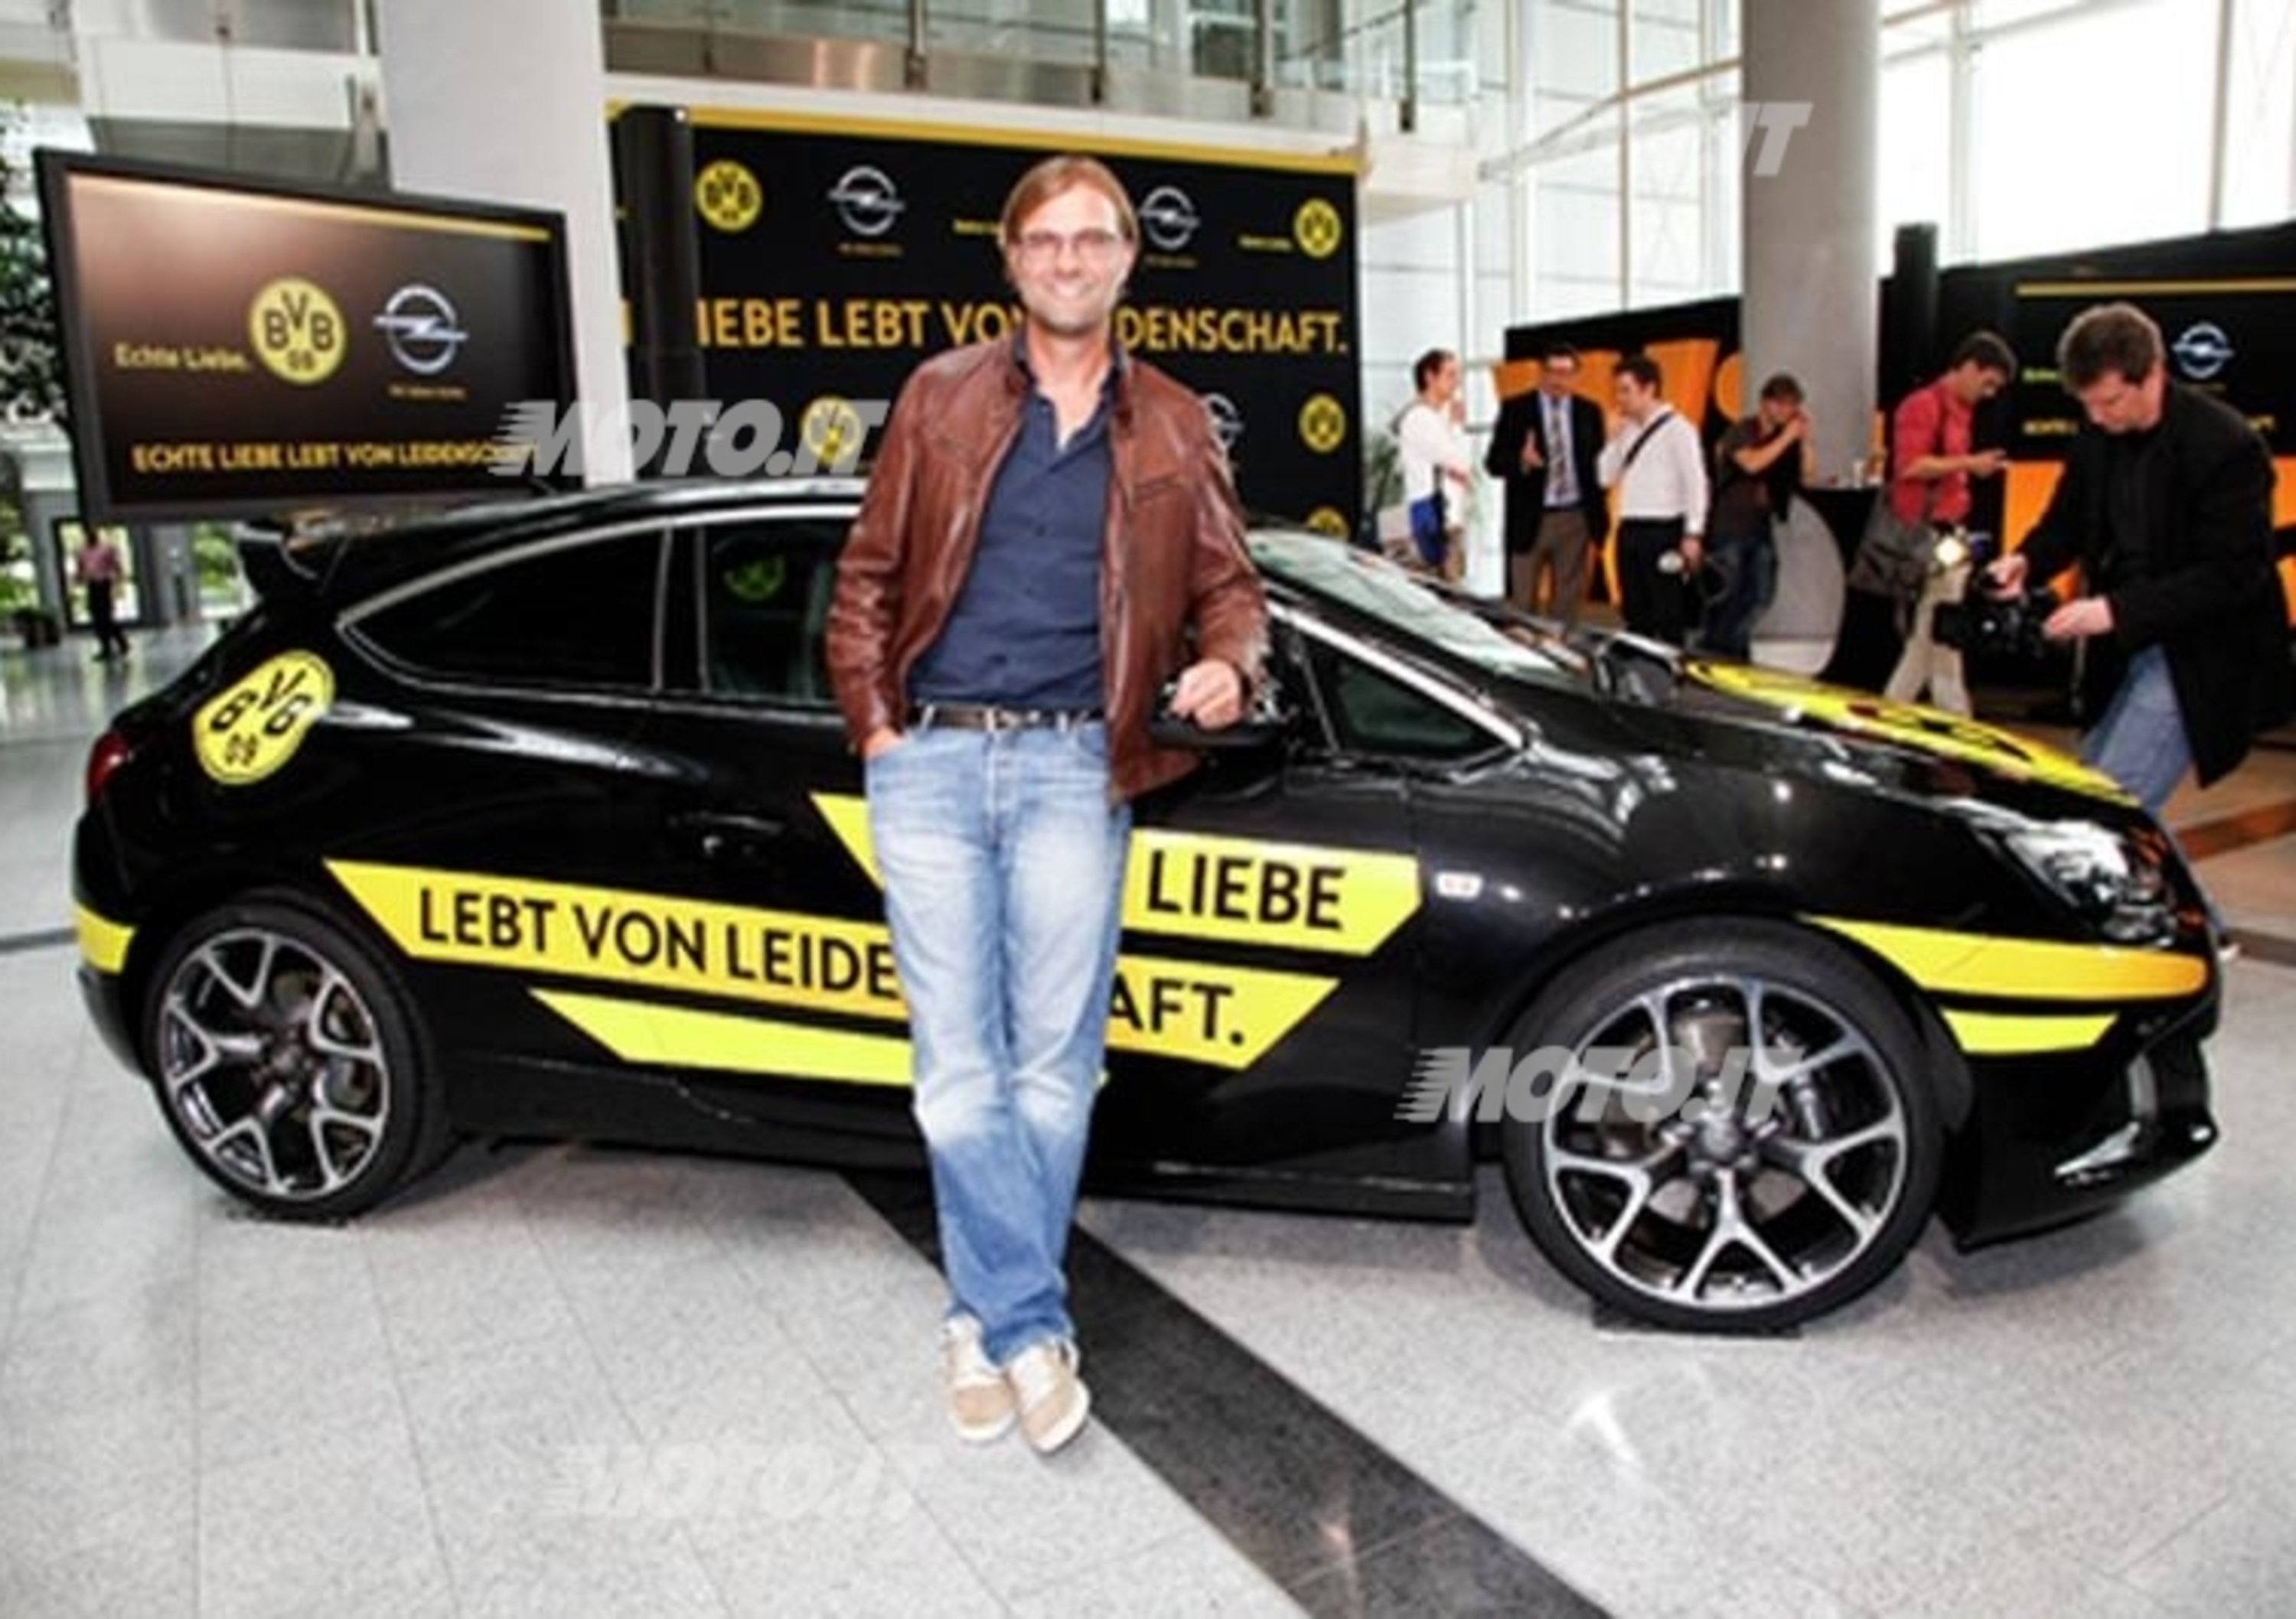 Opel sponsor del Borussia Dortmund